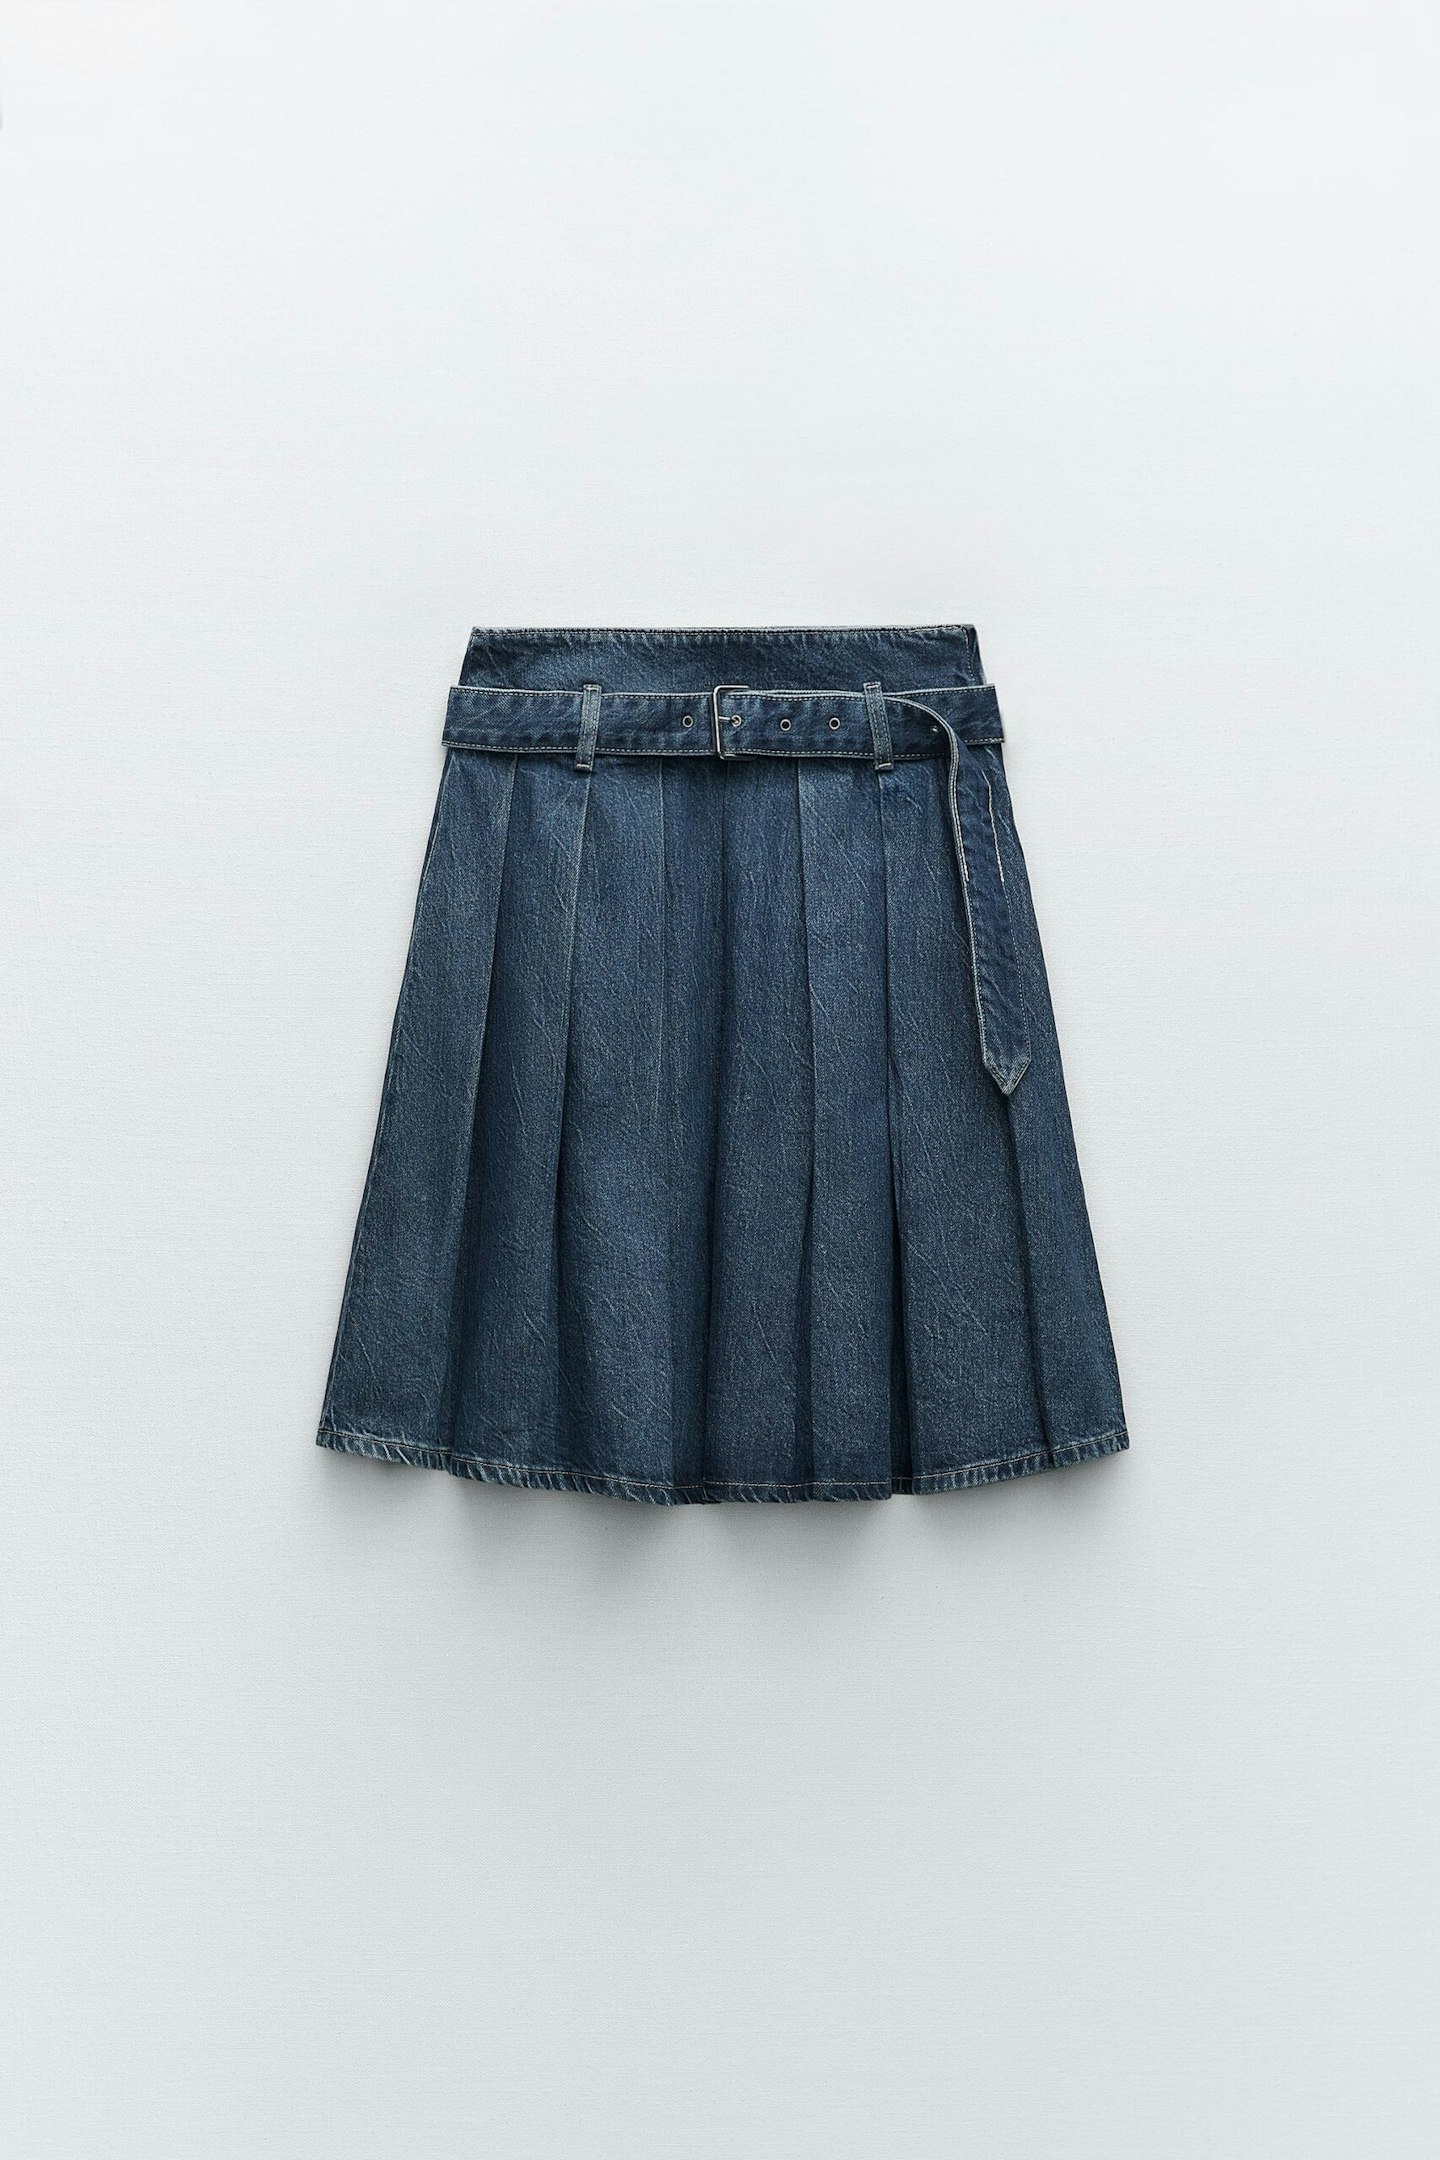 Zara, TRF Denim Box Pleat Skirt